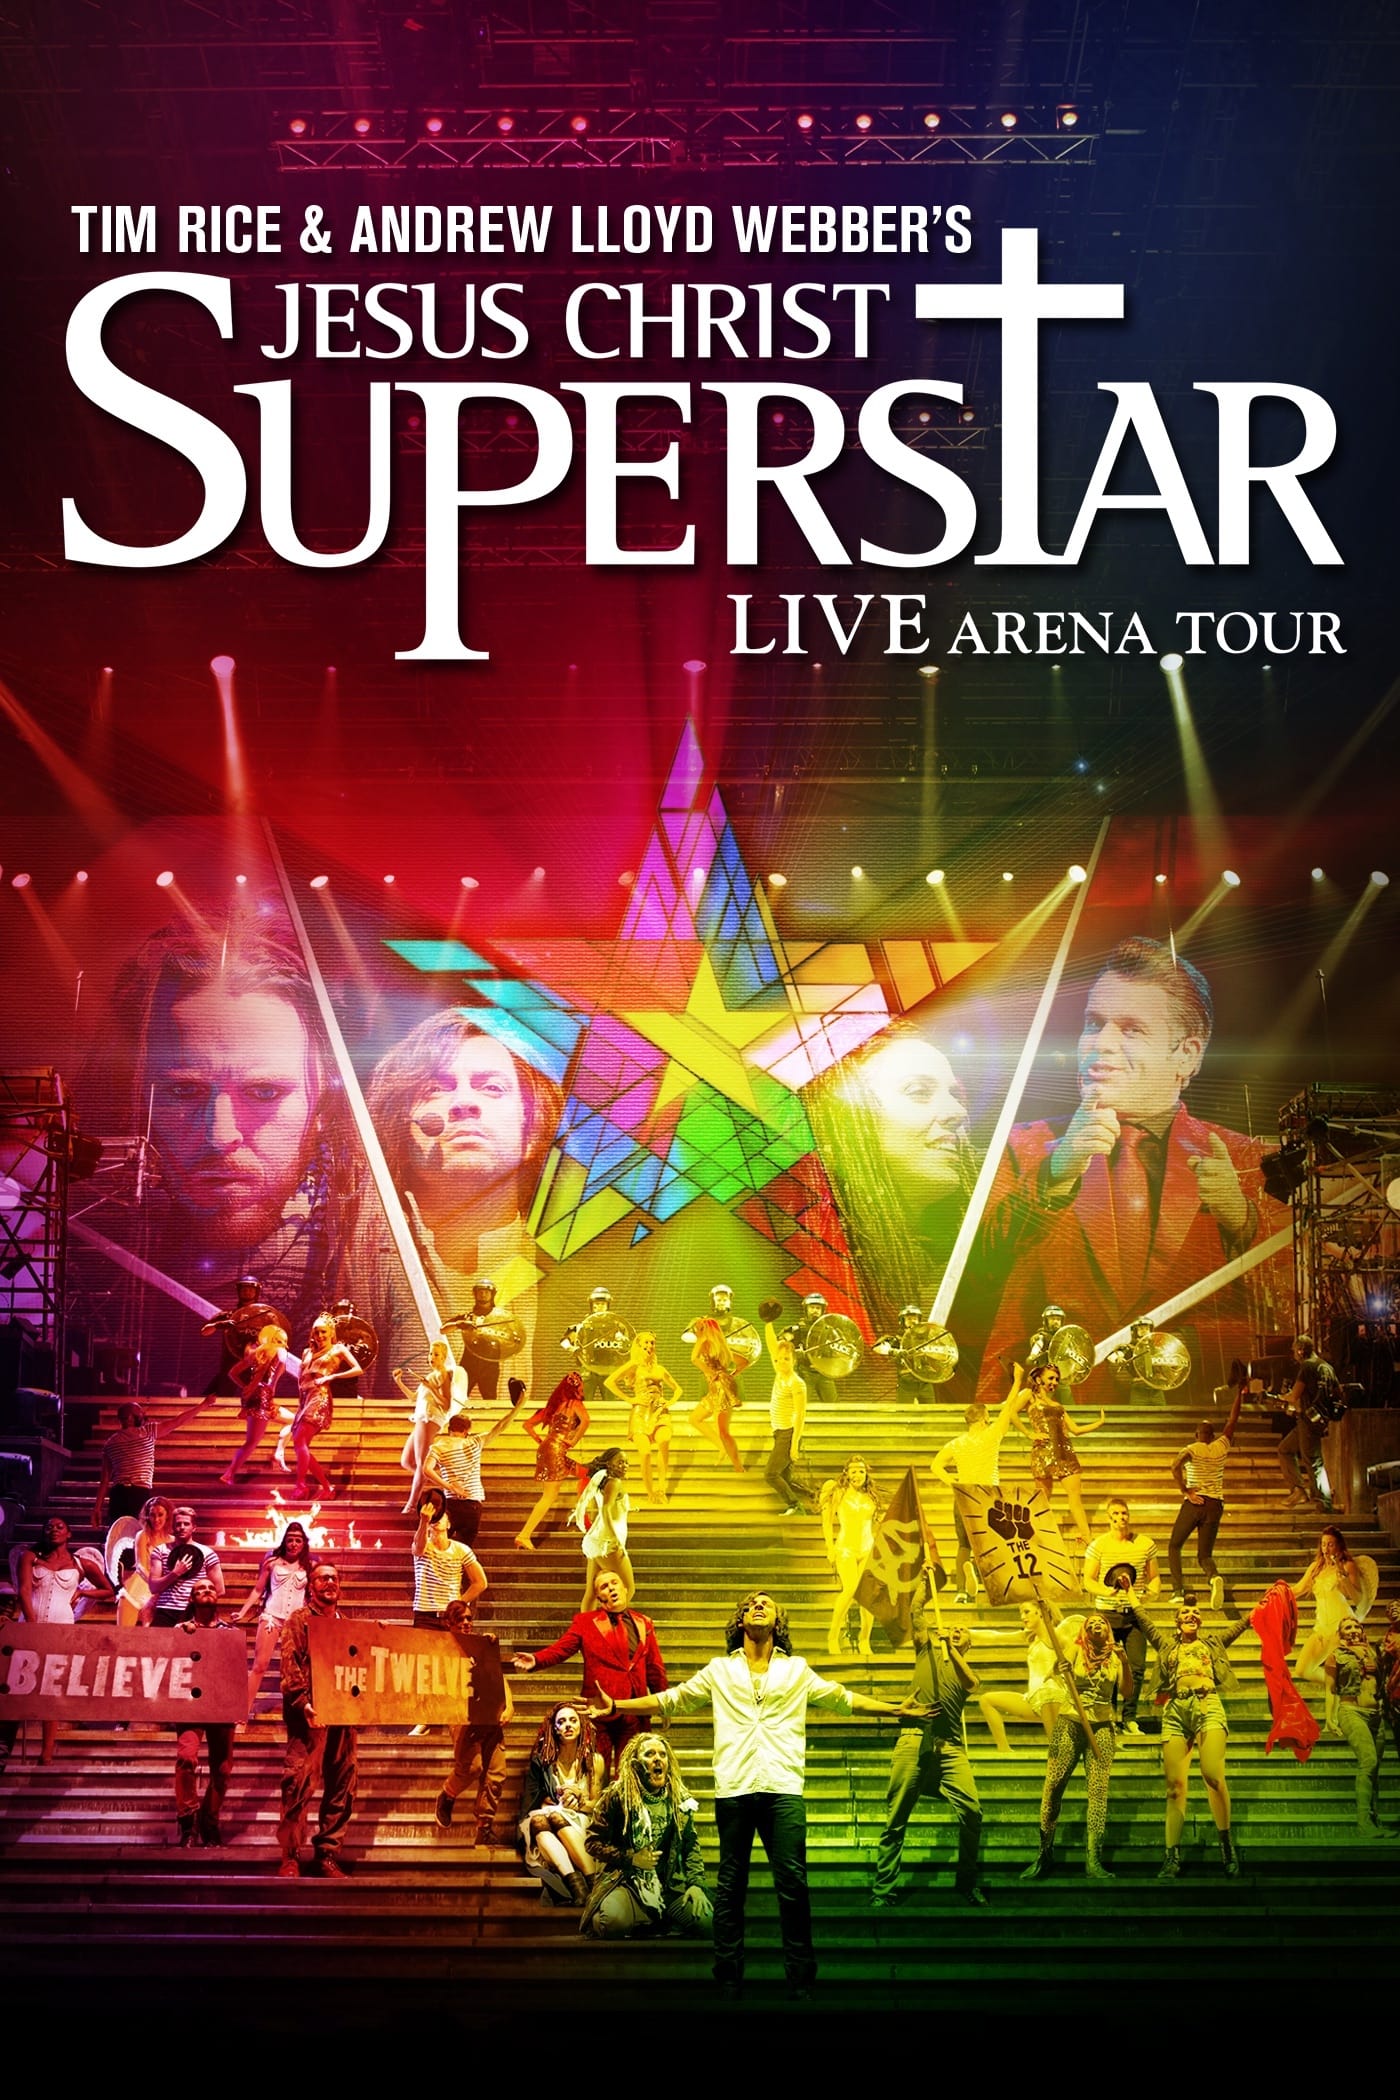 Jesus Christ Superstar - Live Arena Tour (2012)